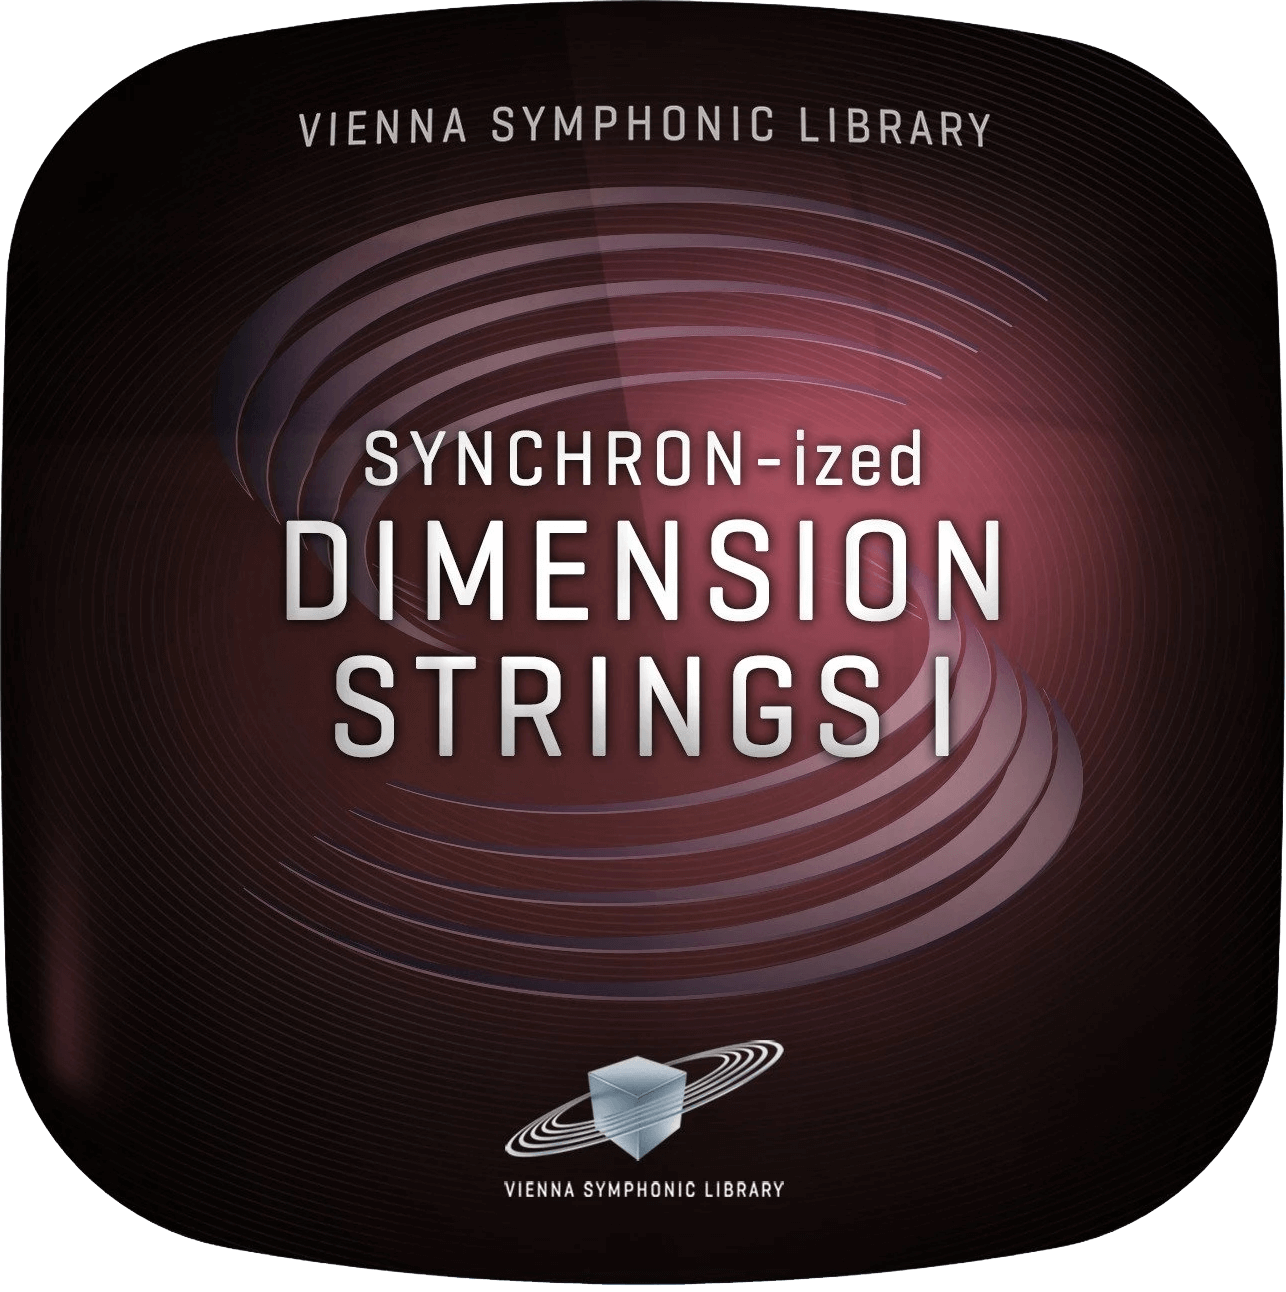 VSL Synchron-ized Dimension Strings I